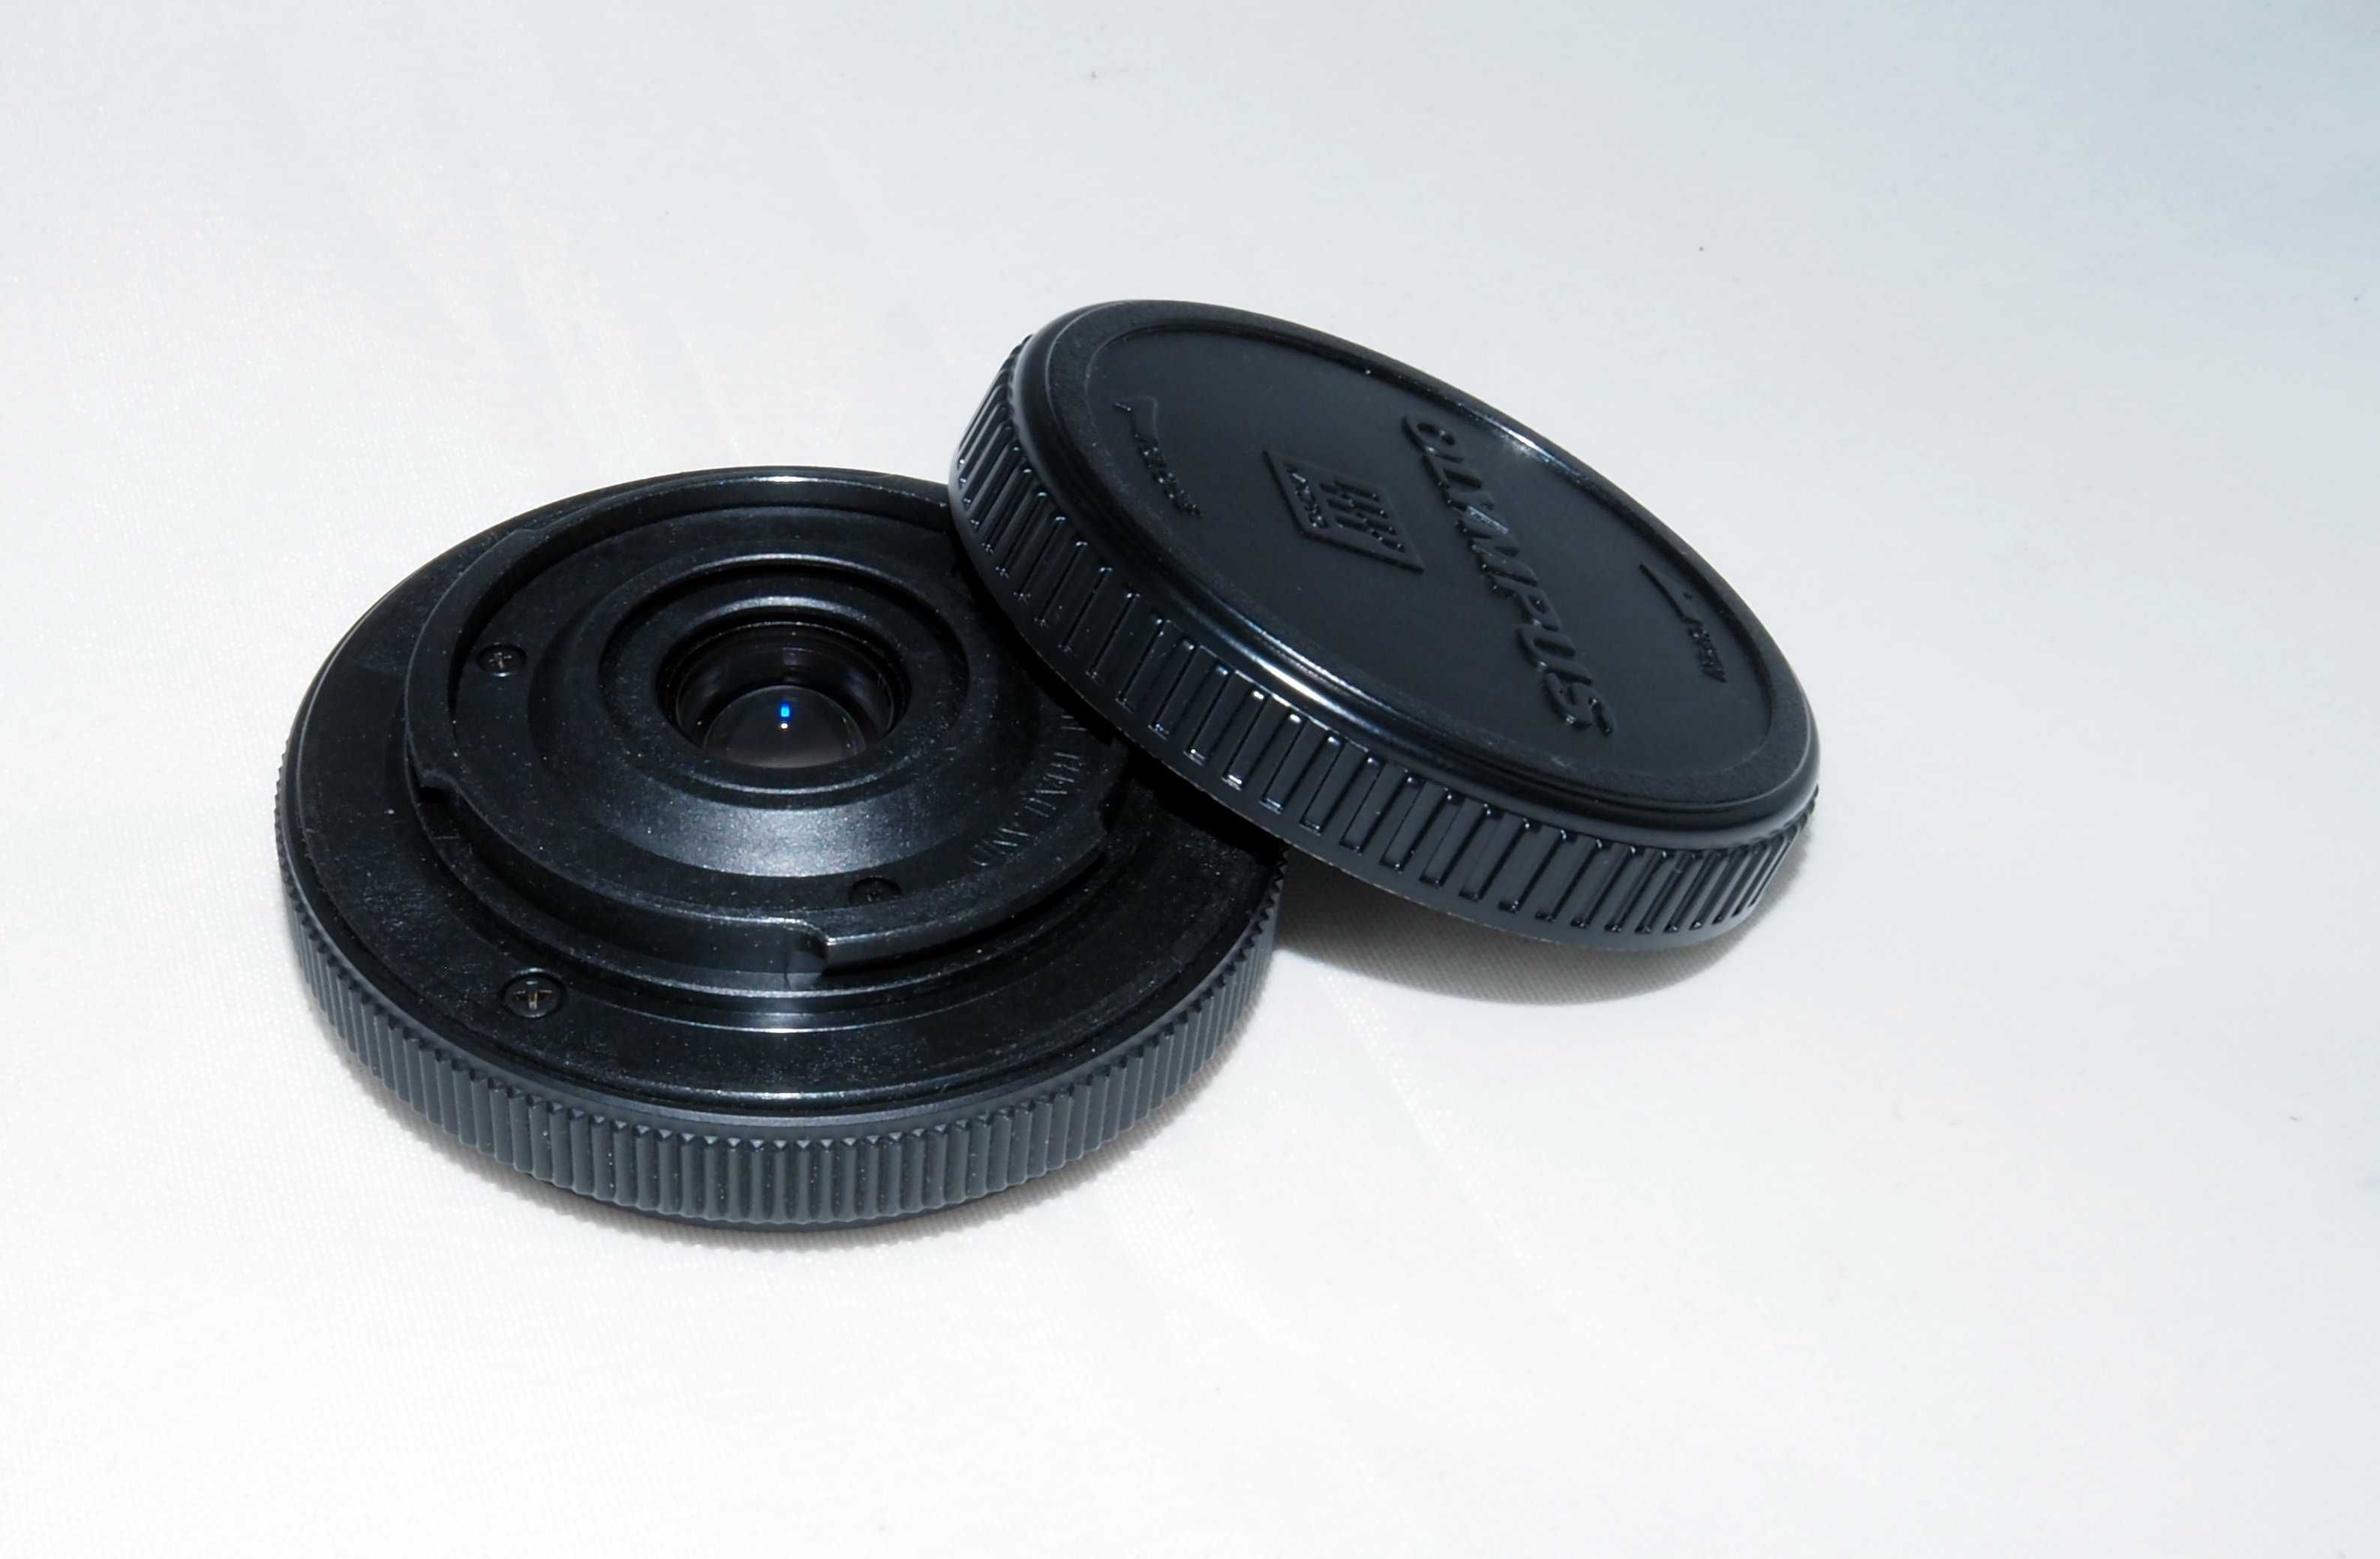 Olympus 9mm f8.0 fisheye bodycap lens MFT M4/3